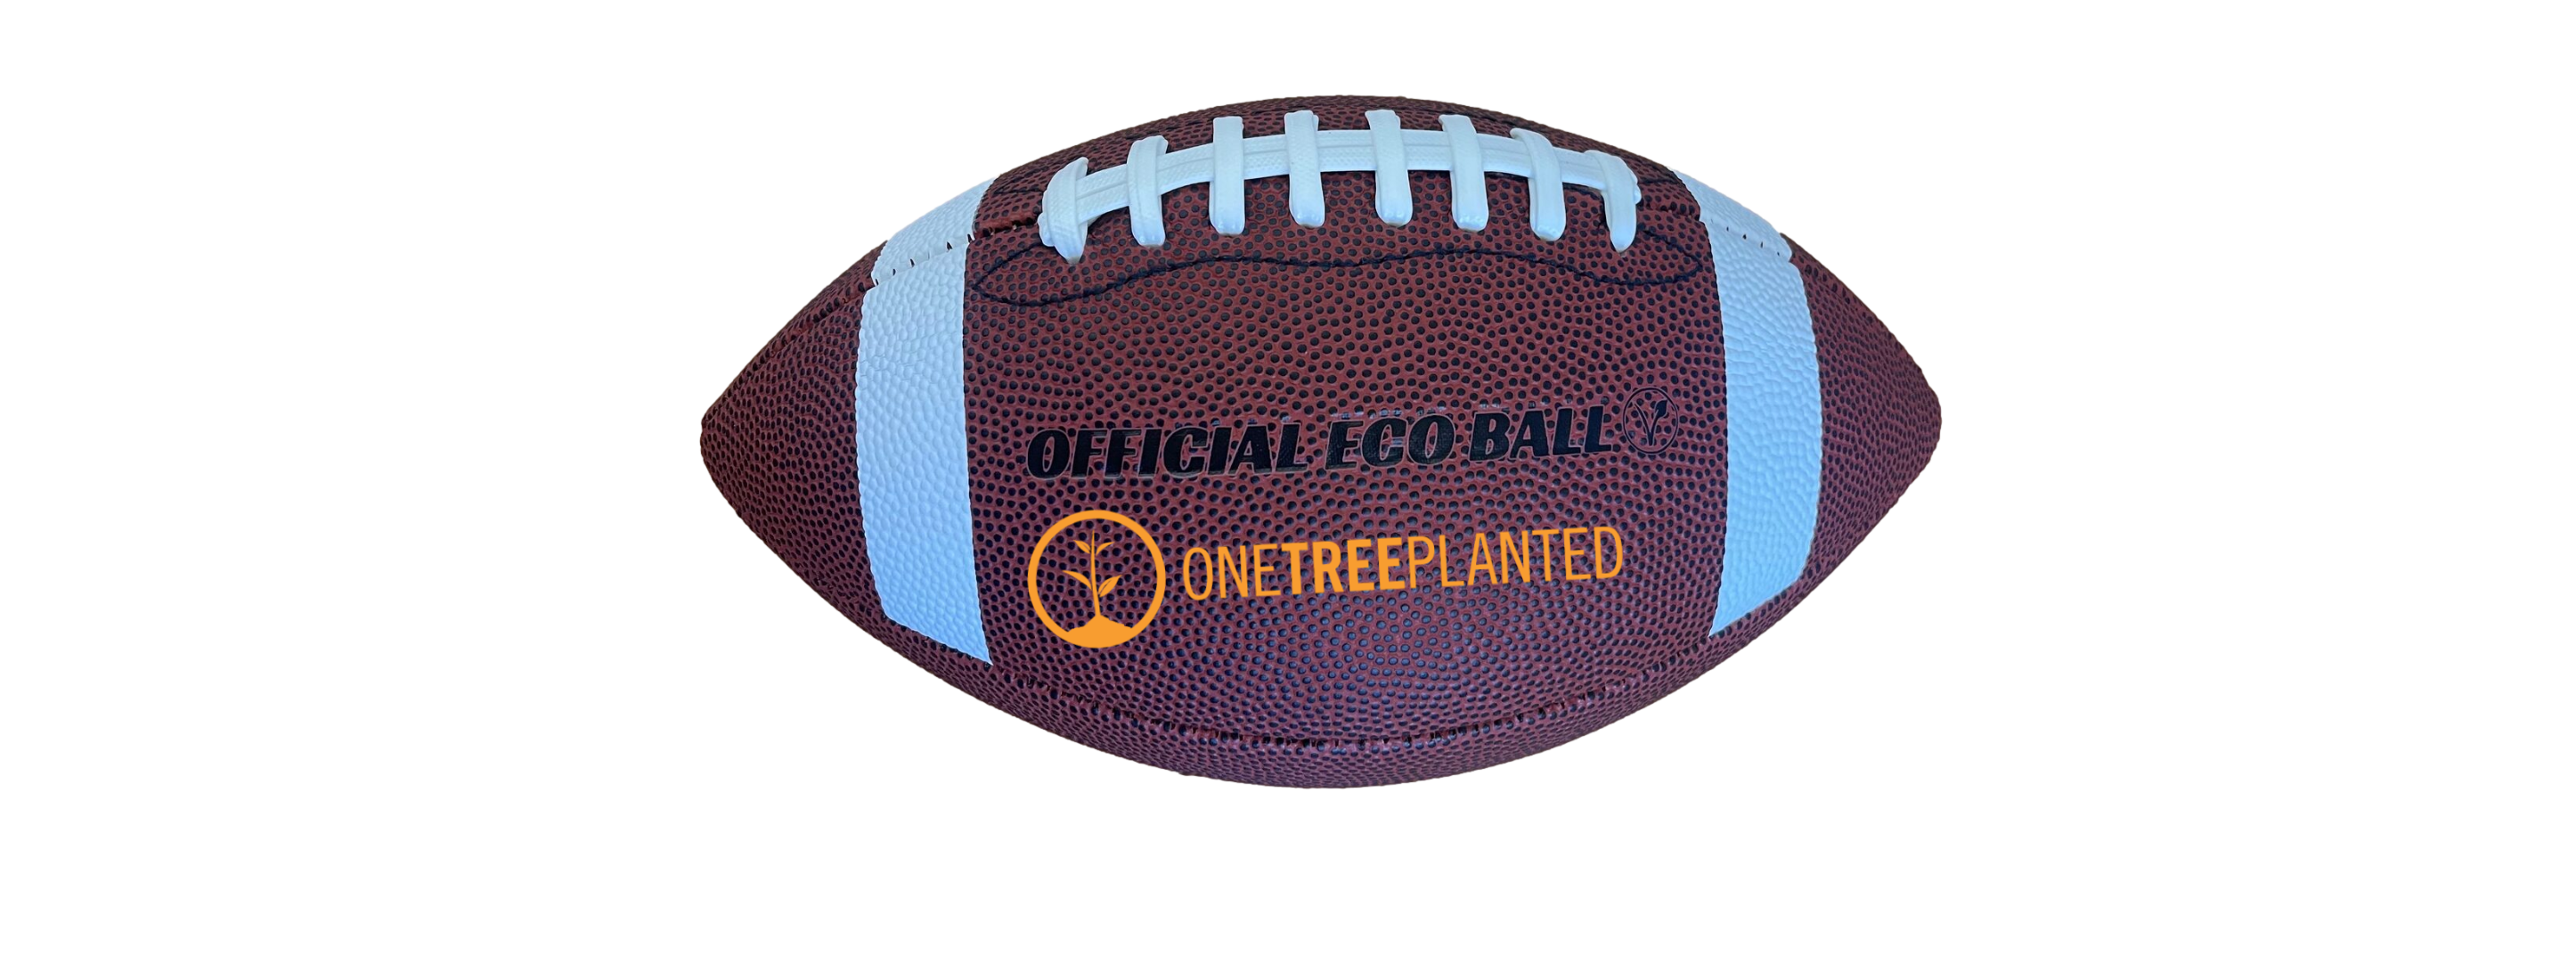 Custom Branded Football Balls For Camps & Schools